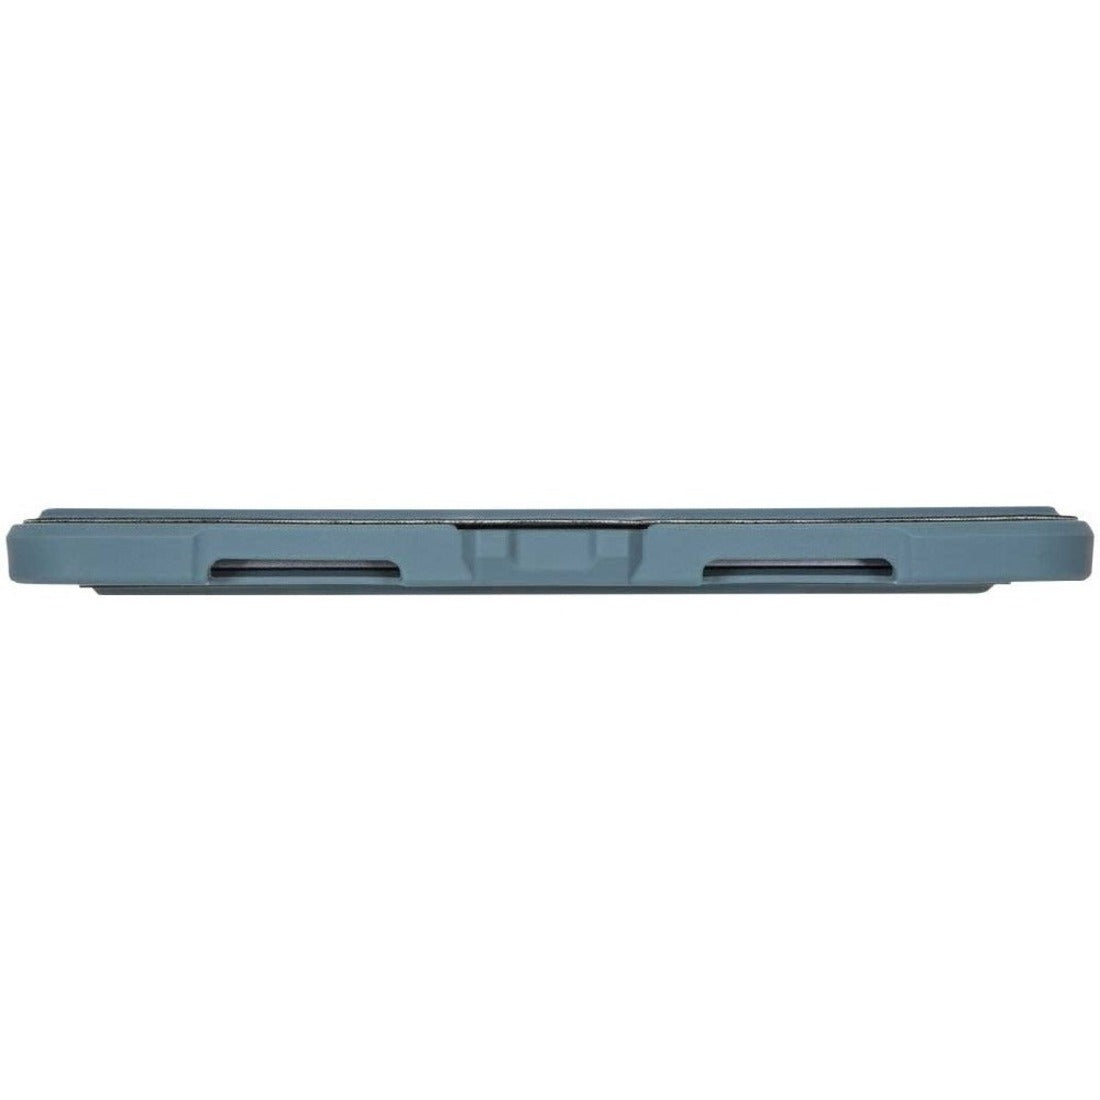 Targus Pro-Tek THZ91302GL Carrying Case (Flip) for 8.3" Apple iPad mini (6th Generation) Tablet - Blue